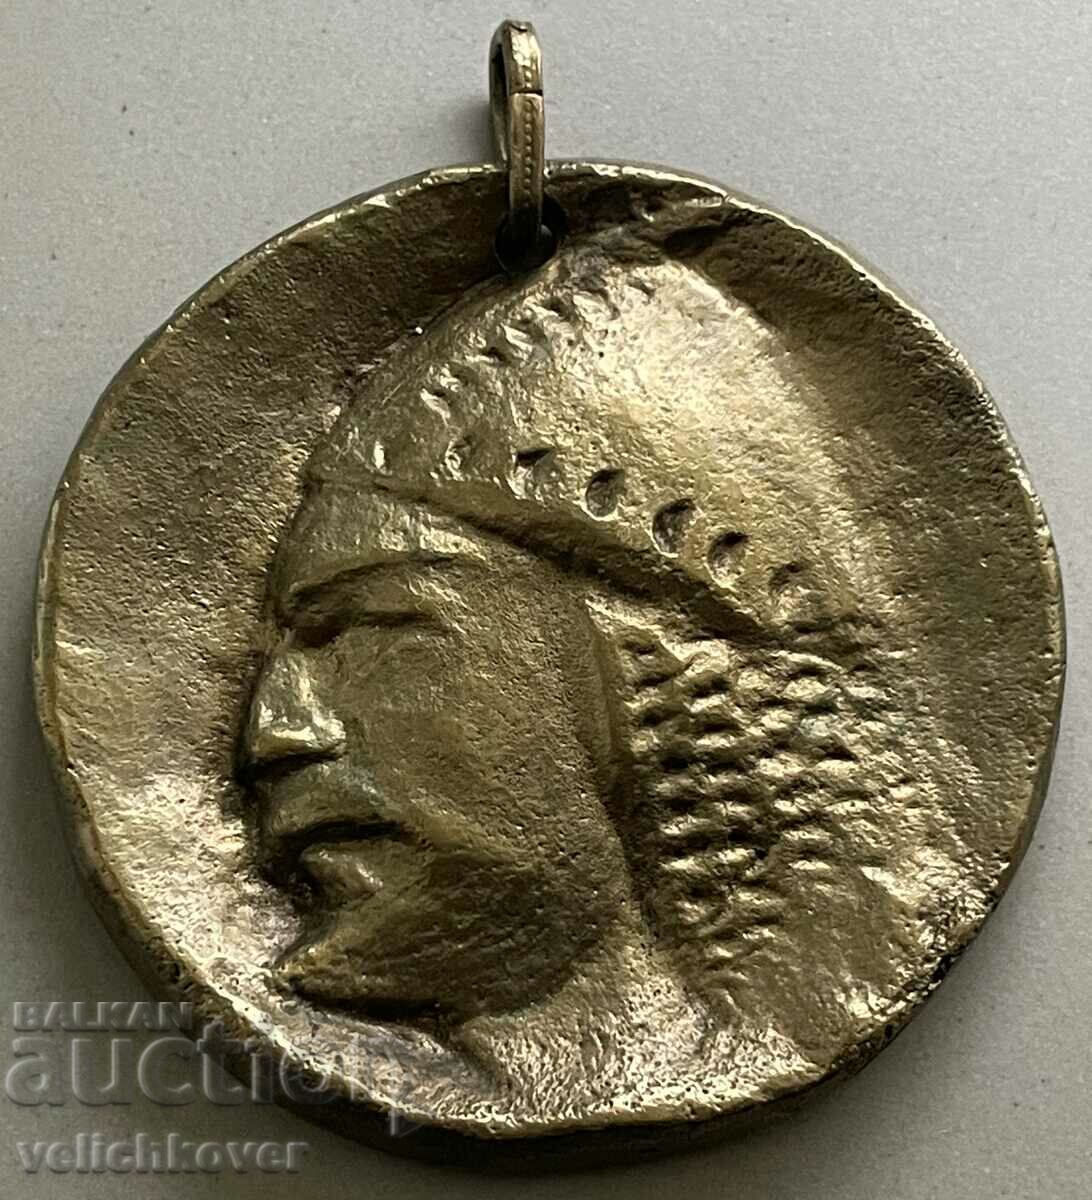 33452 Bulgaria medallion with an old Bulgarian warrior